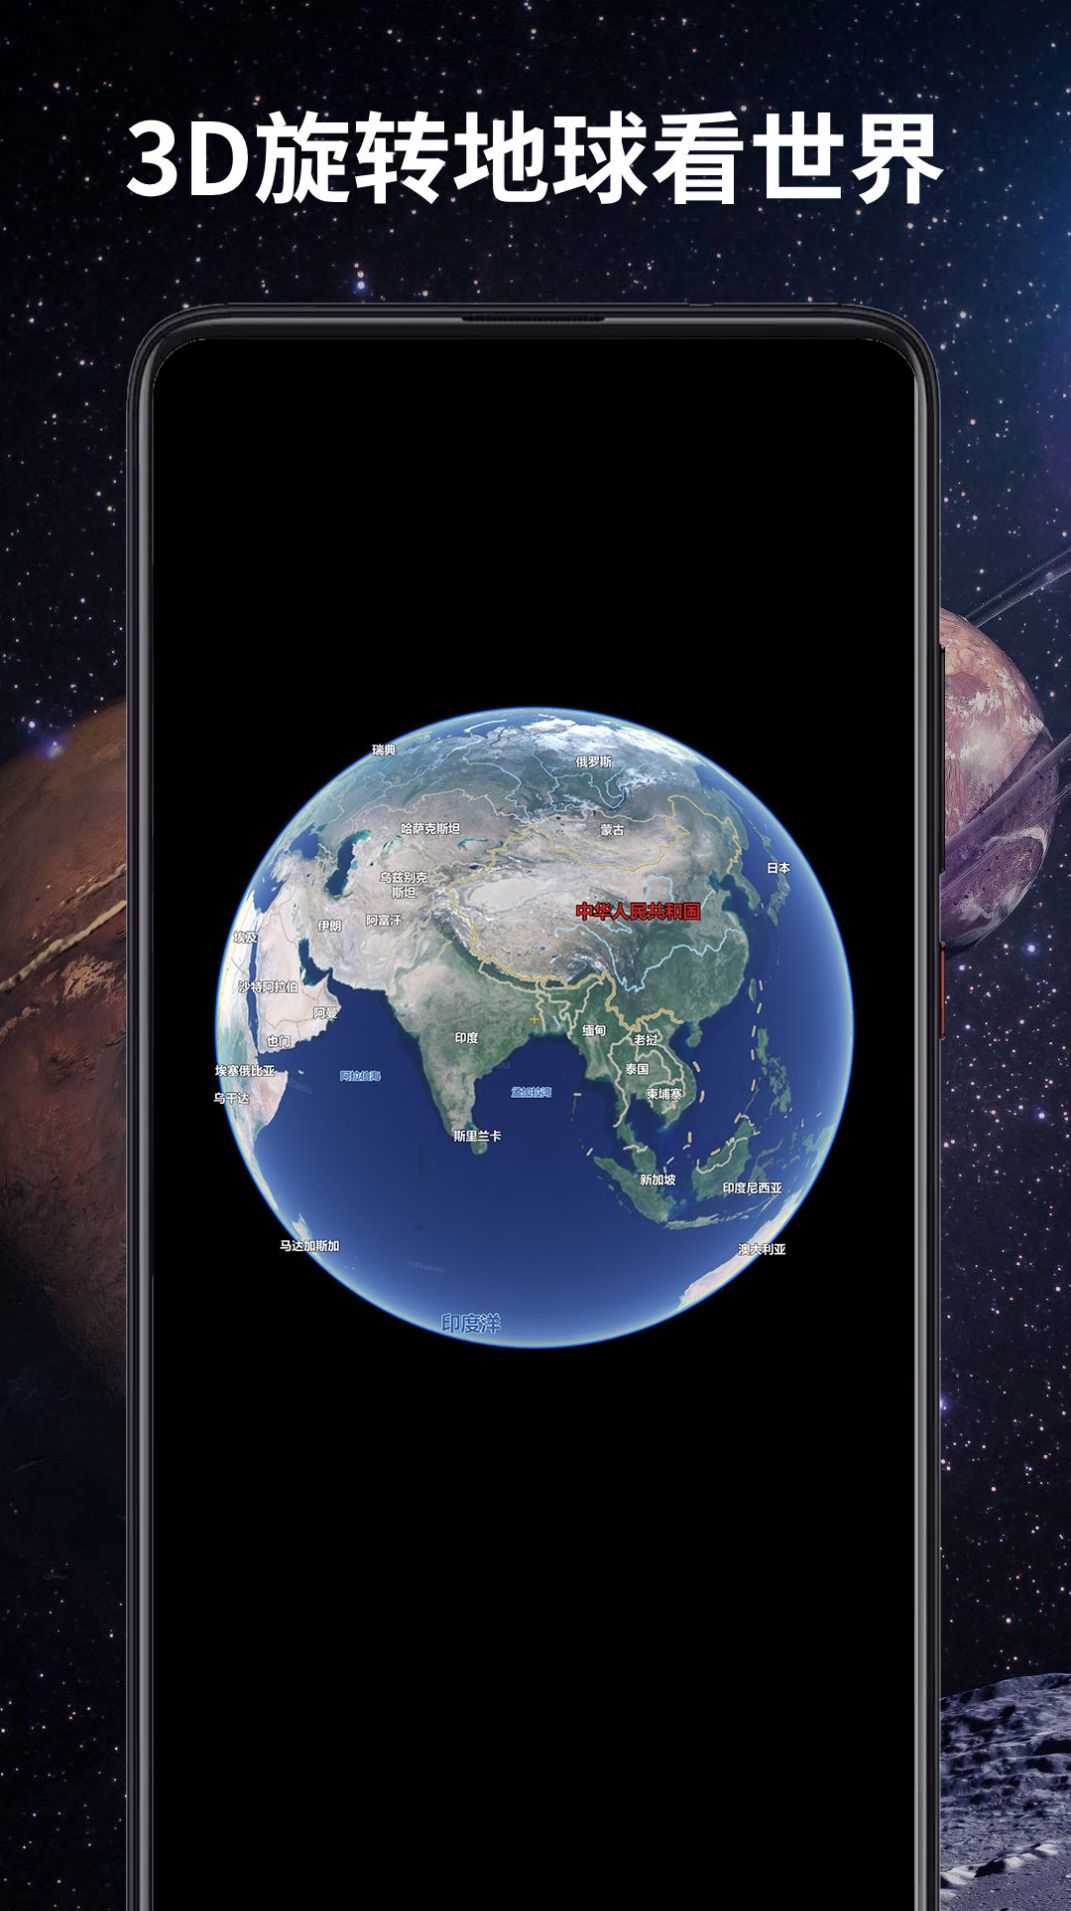 3D全景卫星导航app官方版图片4